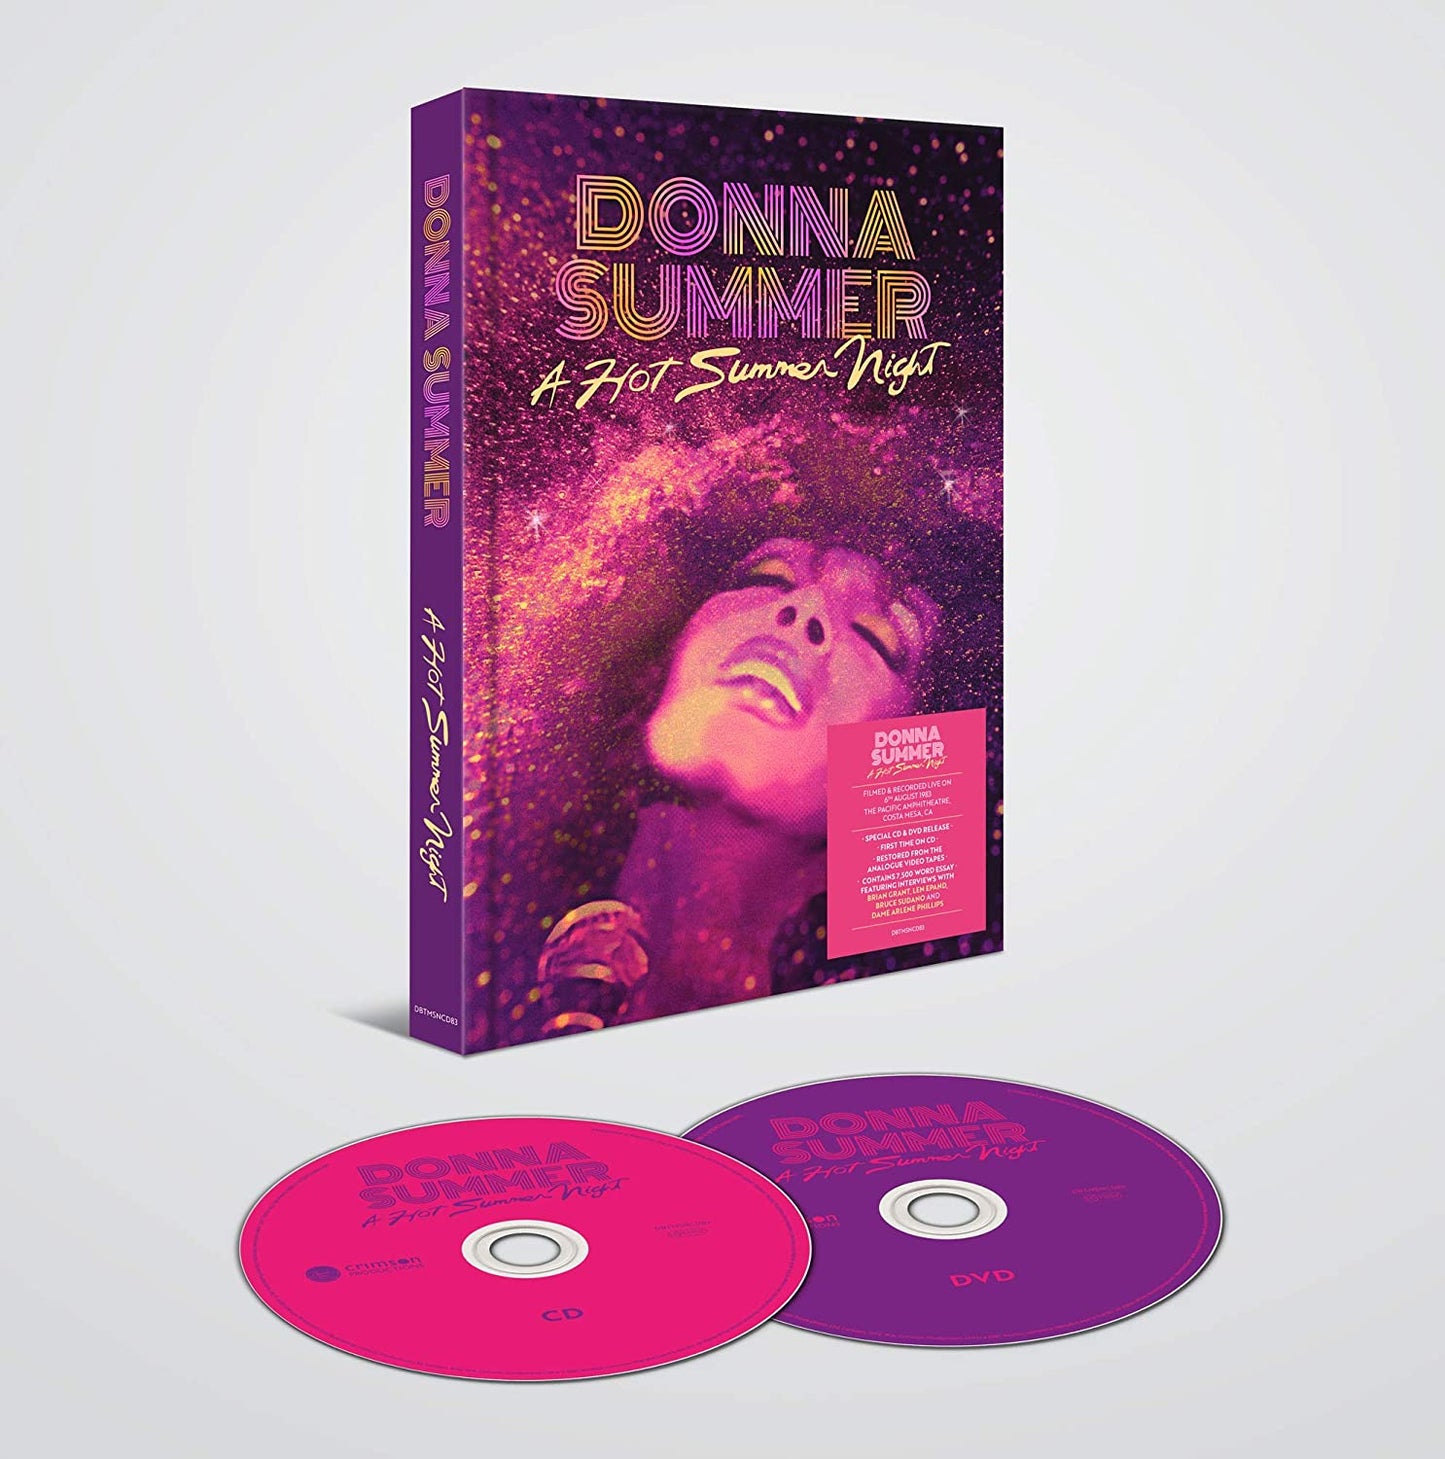 Donna Summer / A Hot Summer Night CD+DVD deluxe